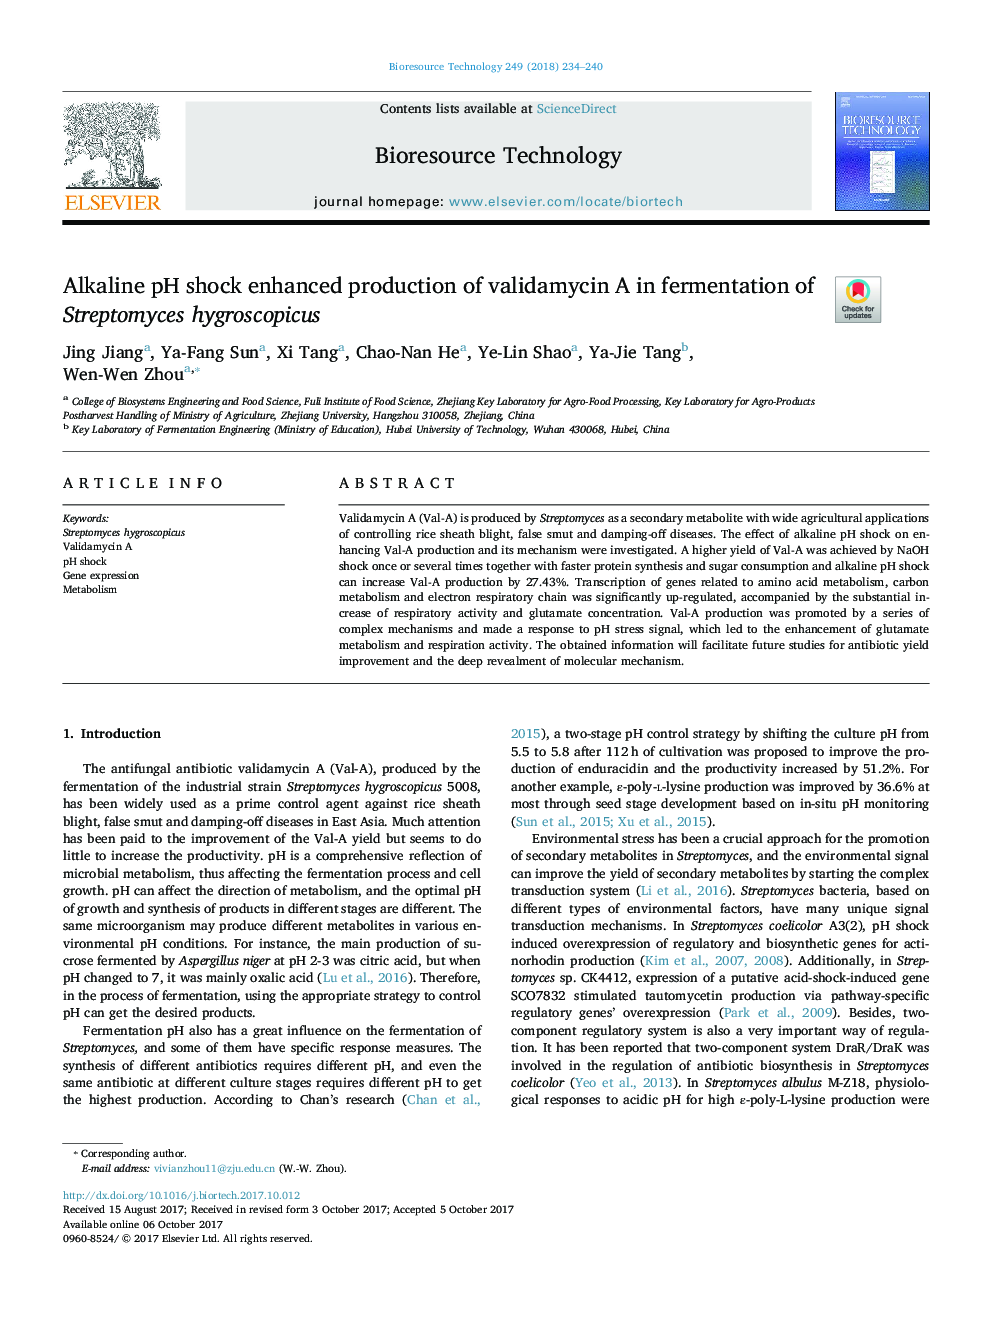 Alkaline pH shock enhanced production of validamycin A in fermentation of Streptomyces hygroscopicus